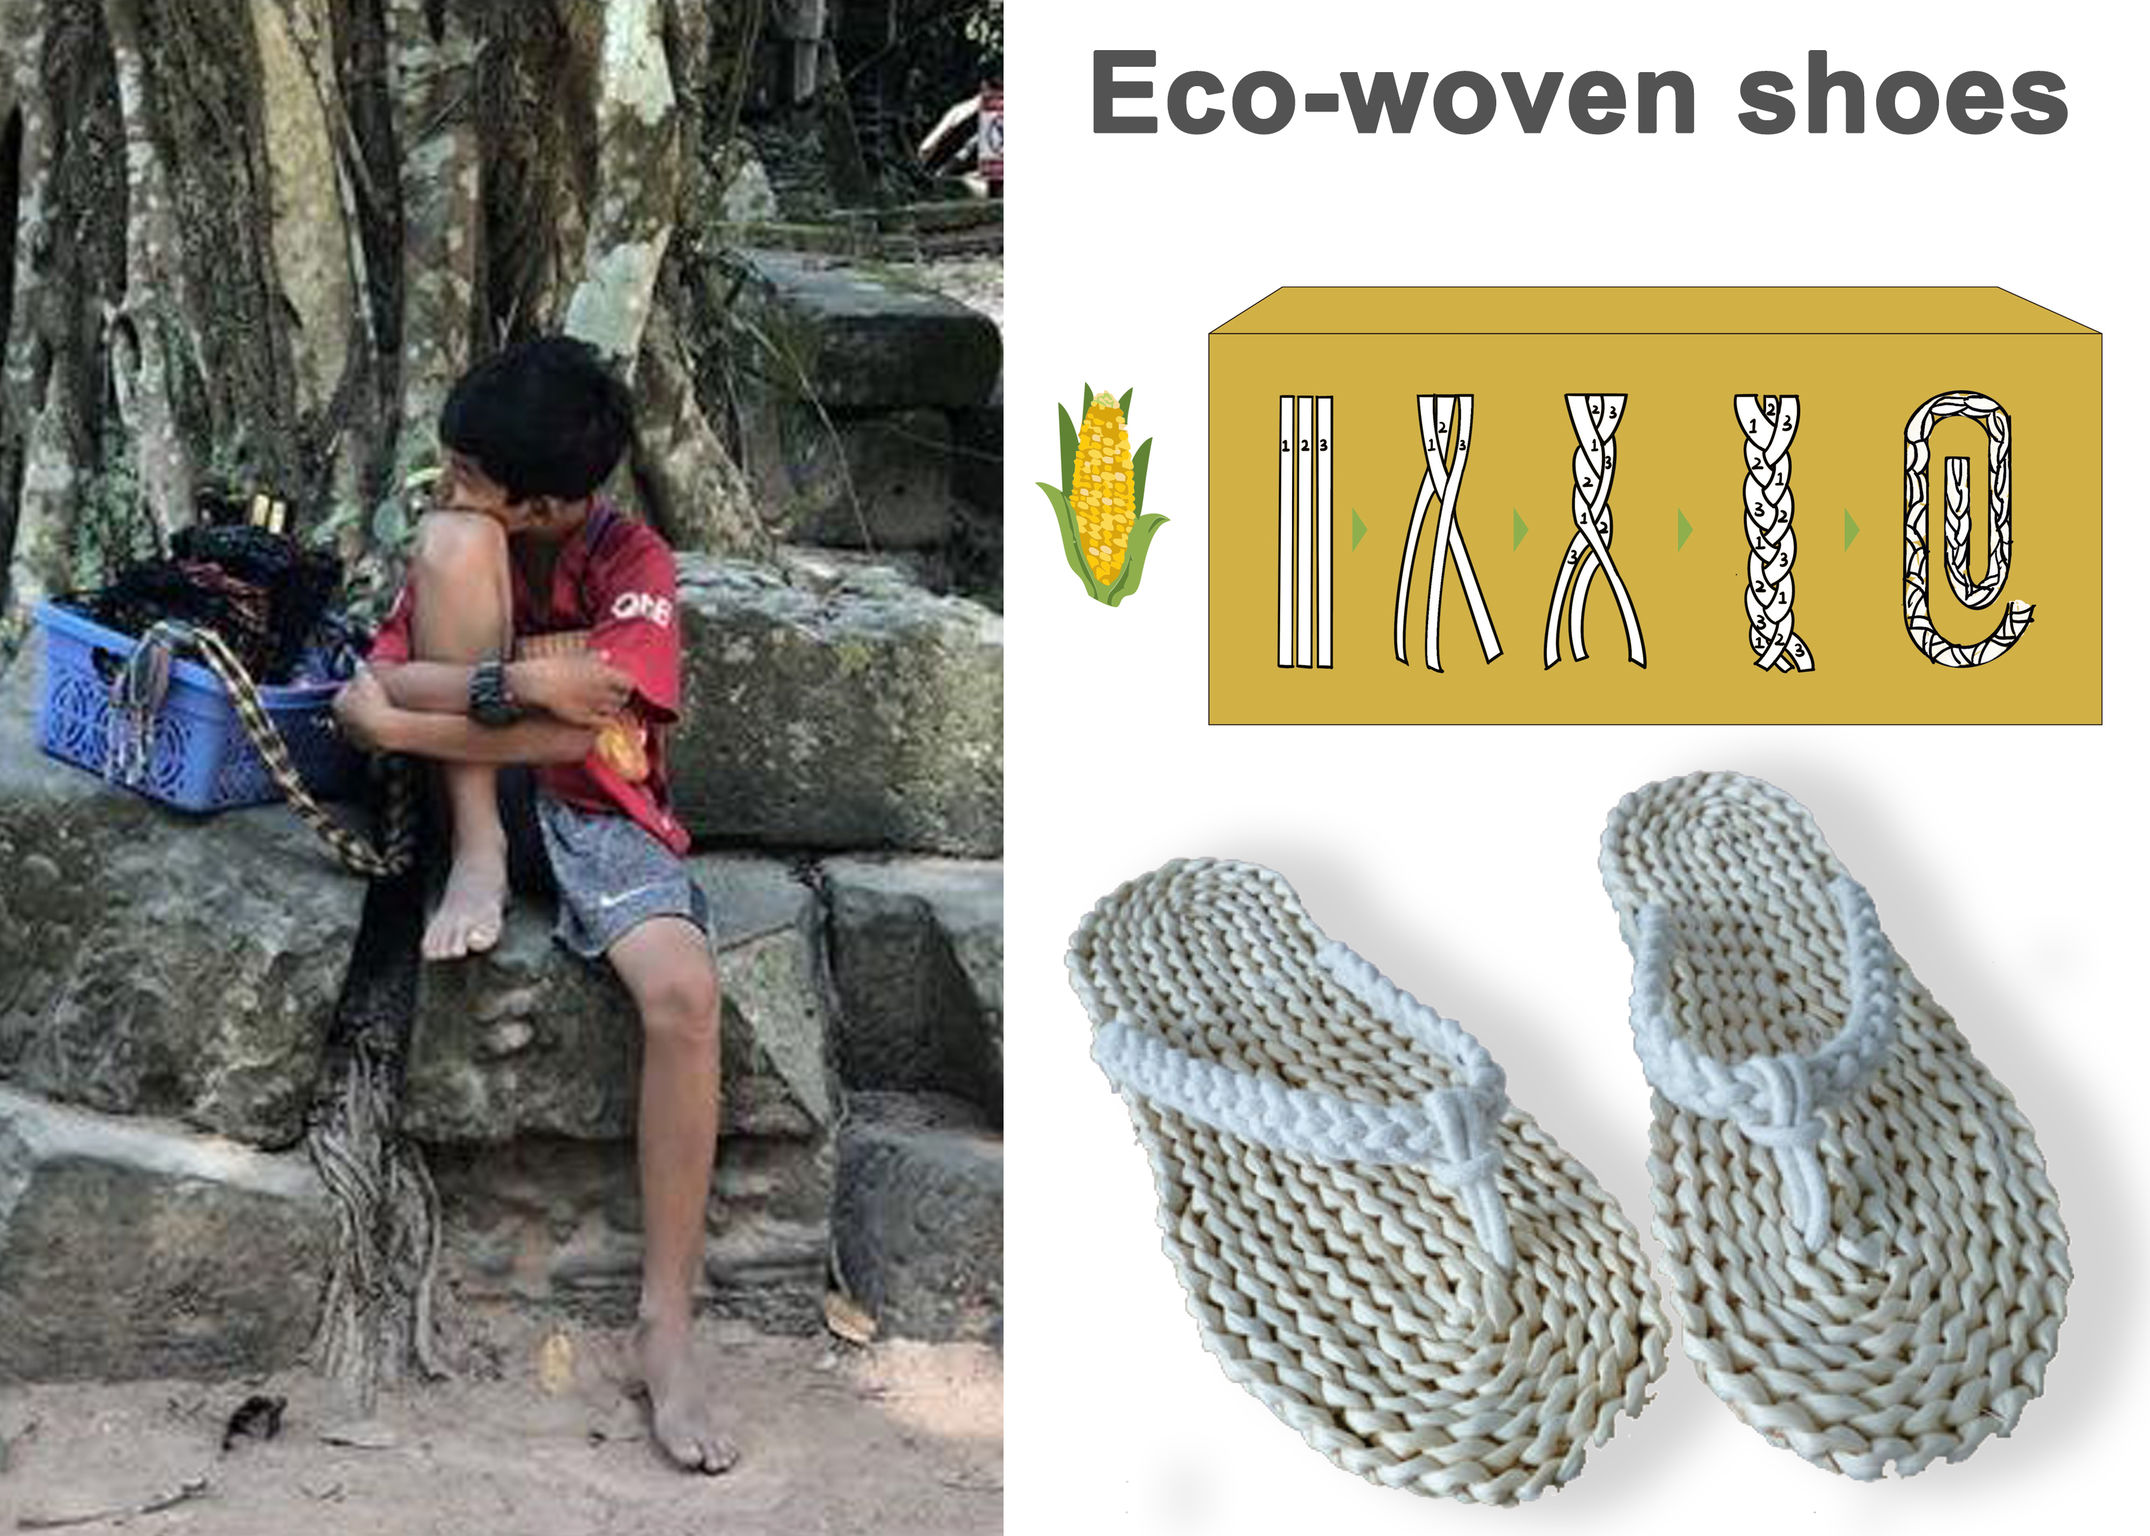 Eco-woven shoes